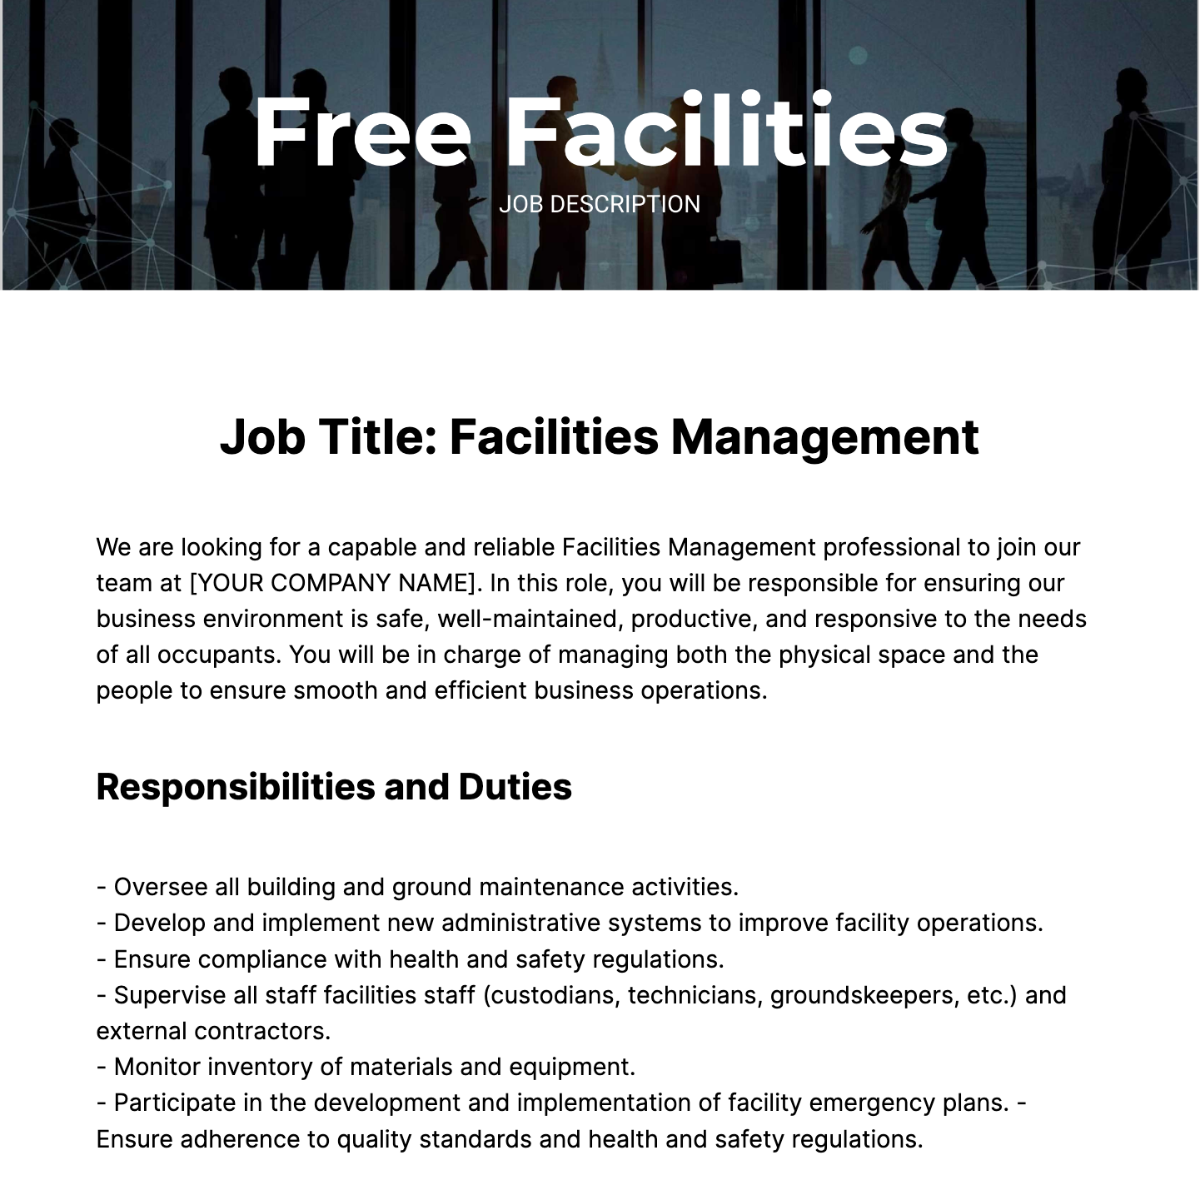 Free Facilities Job Description Template